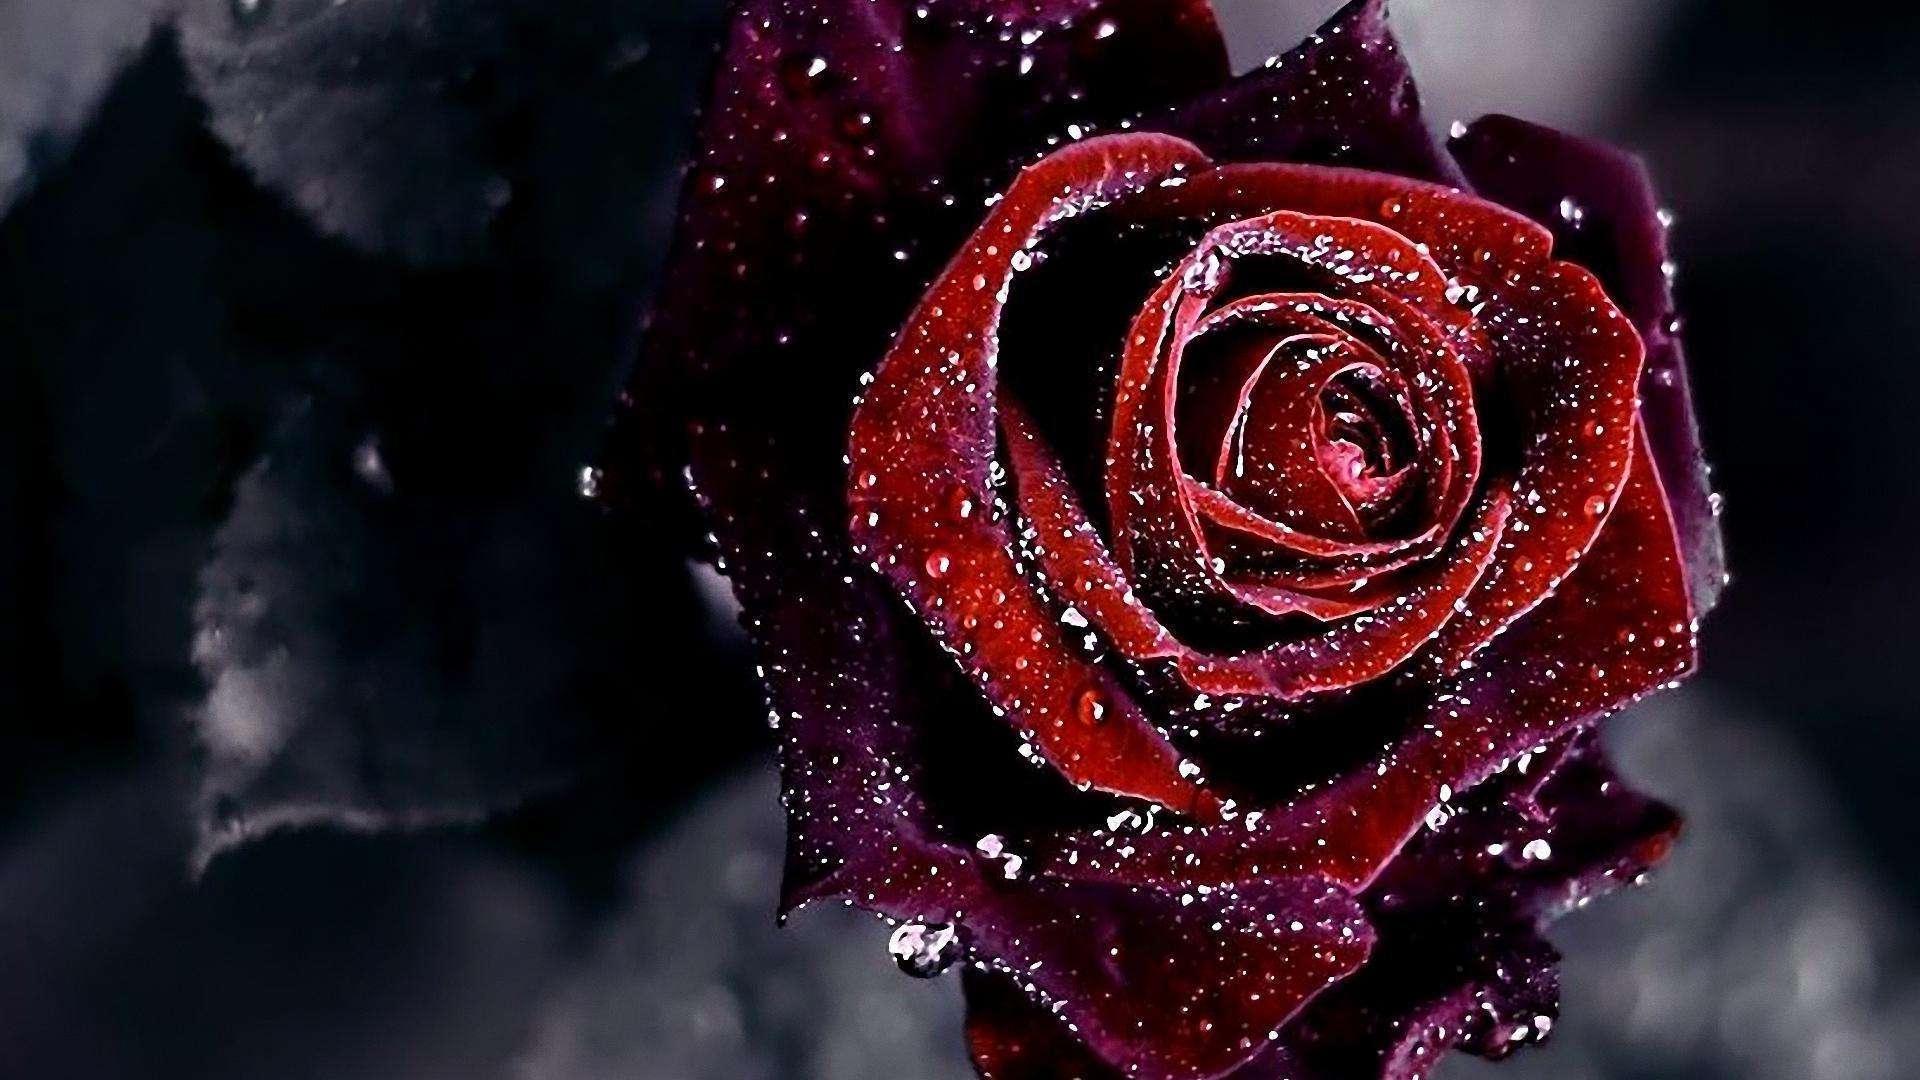 Red And Black Rose Wallpaper   GzsiHaicom